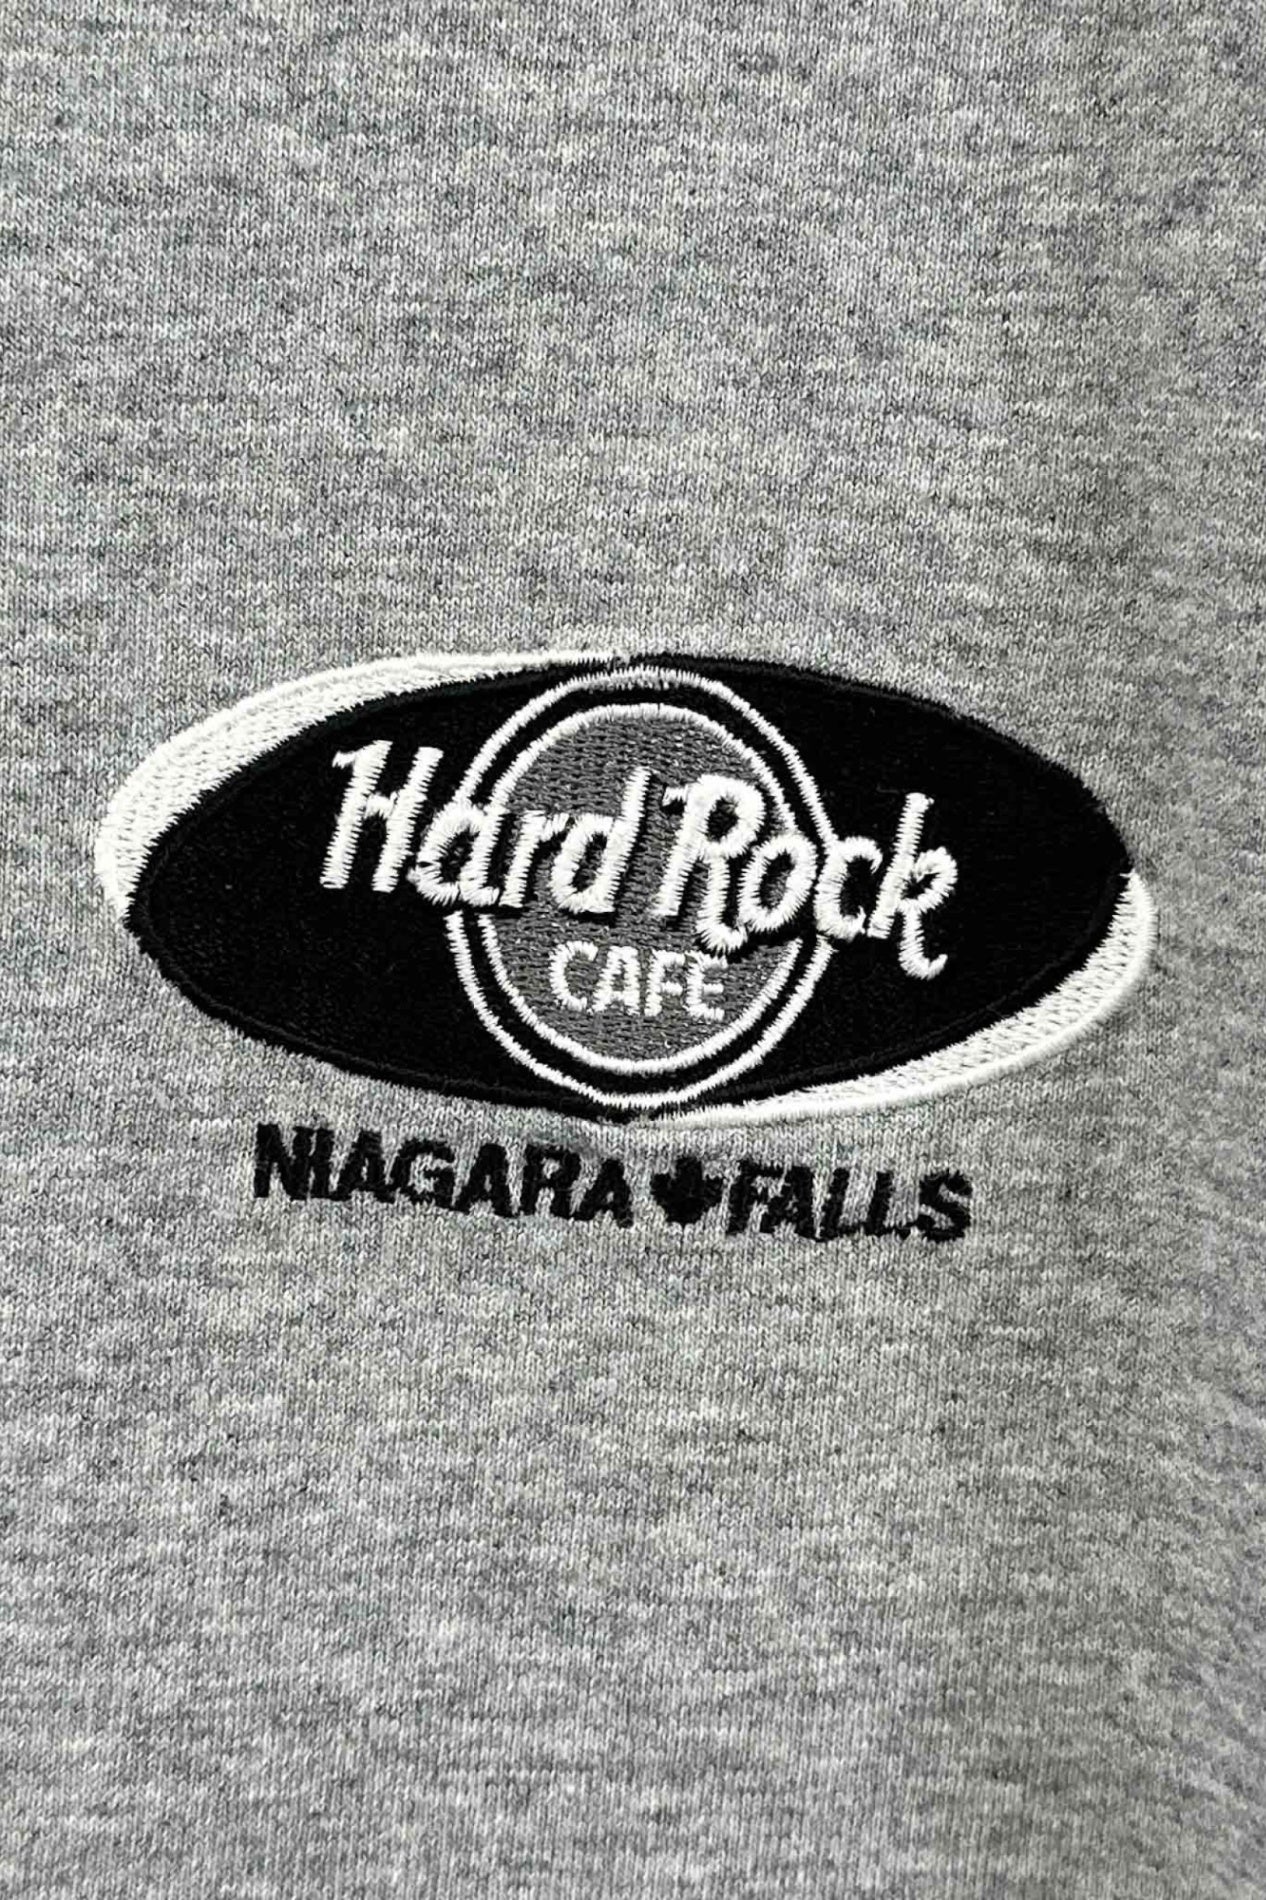 Hard Rock CAFE gray T-shirt